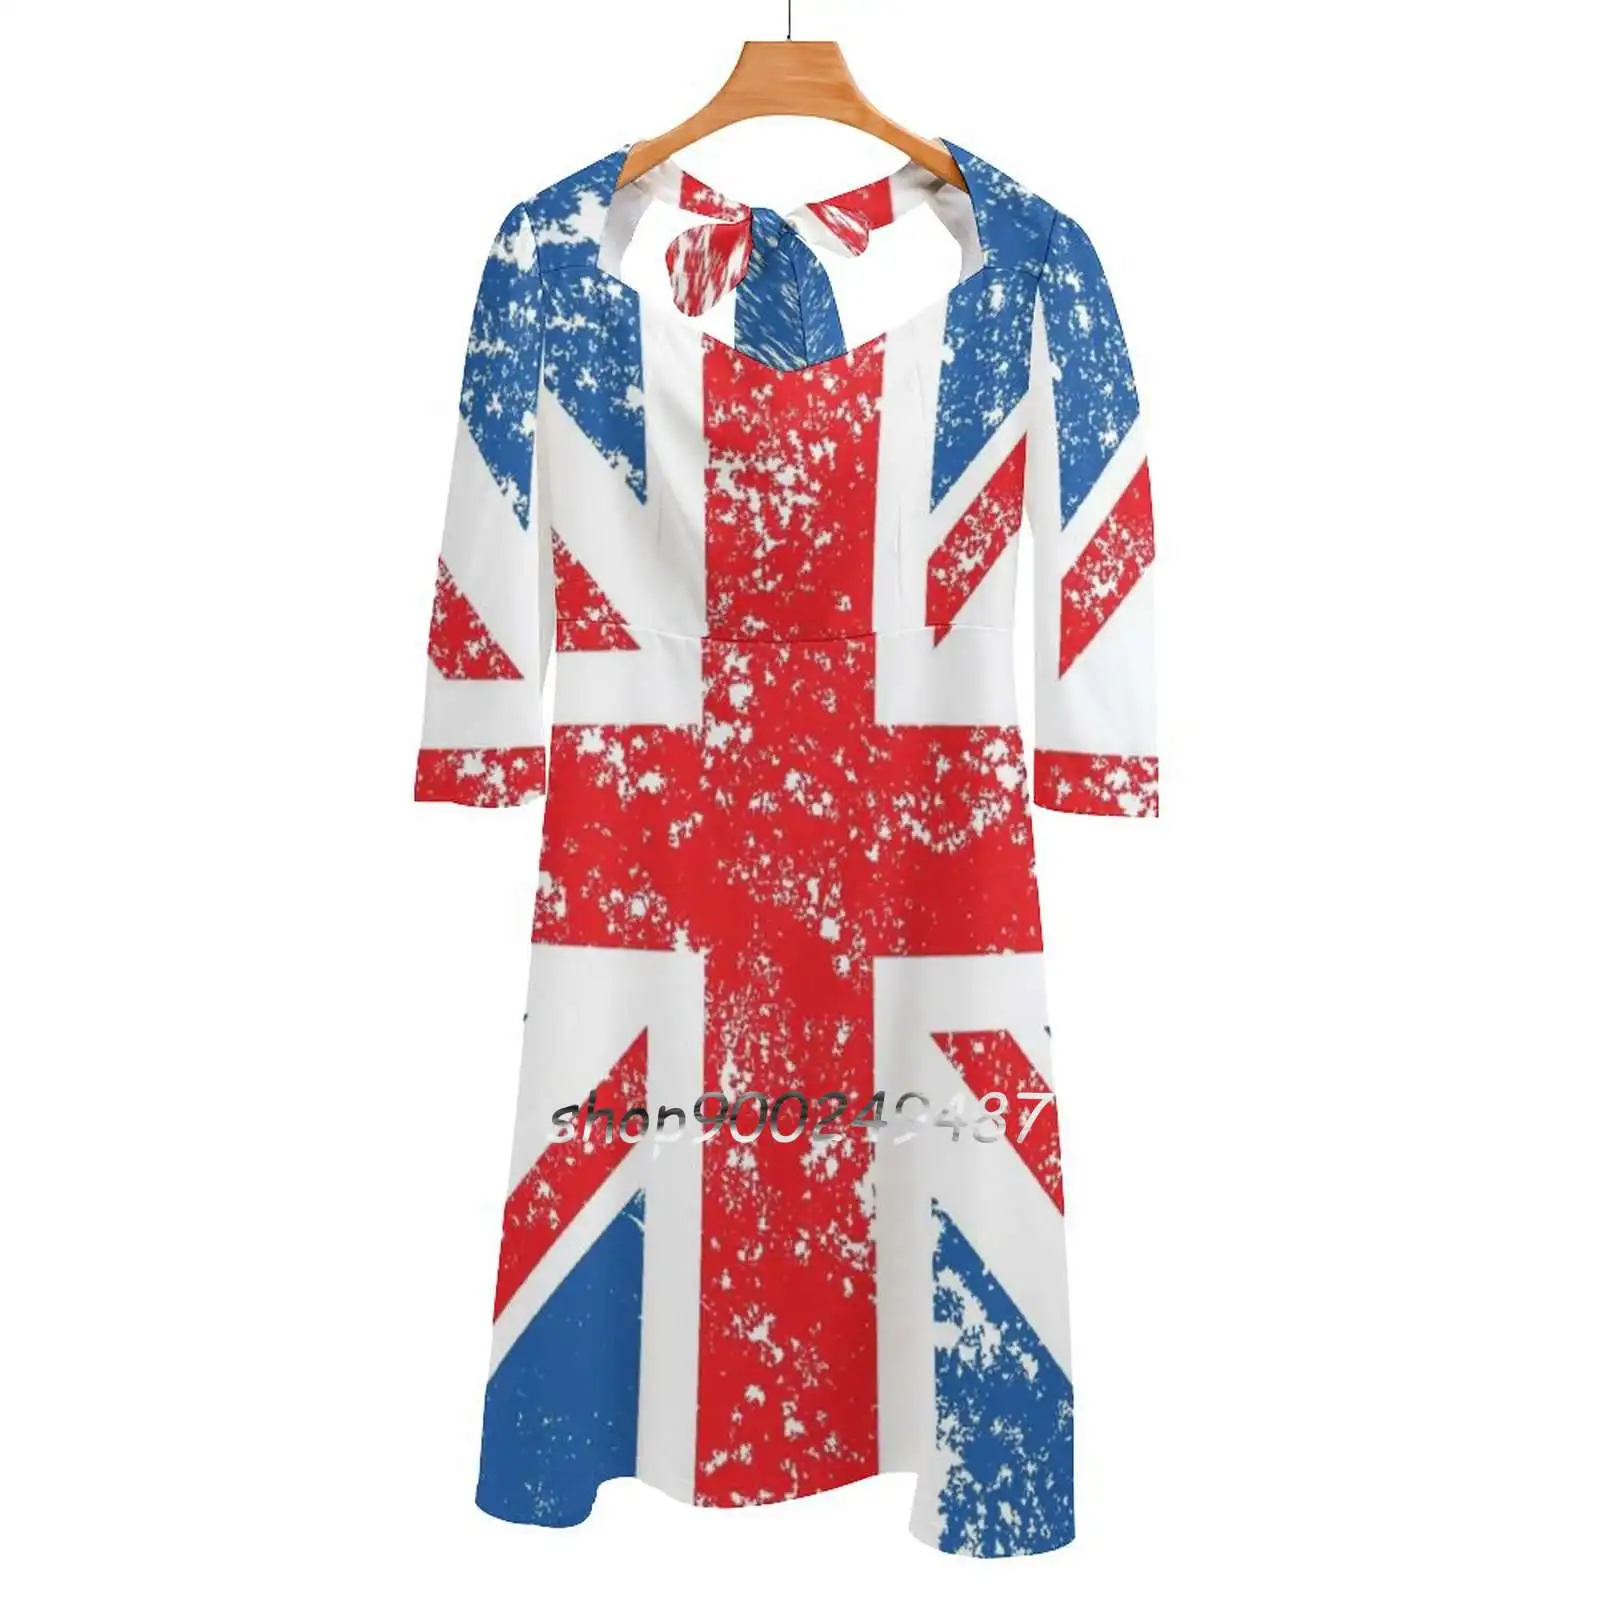 

Distressed Effect Union Jack / Flag Square Neck Dress New Plus Size Elegant Women Waist Tight Dress Distressed Union Jack